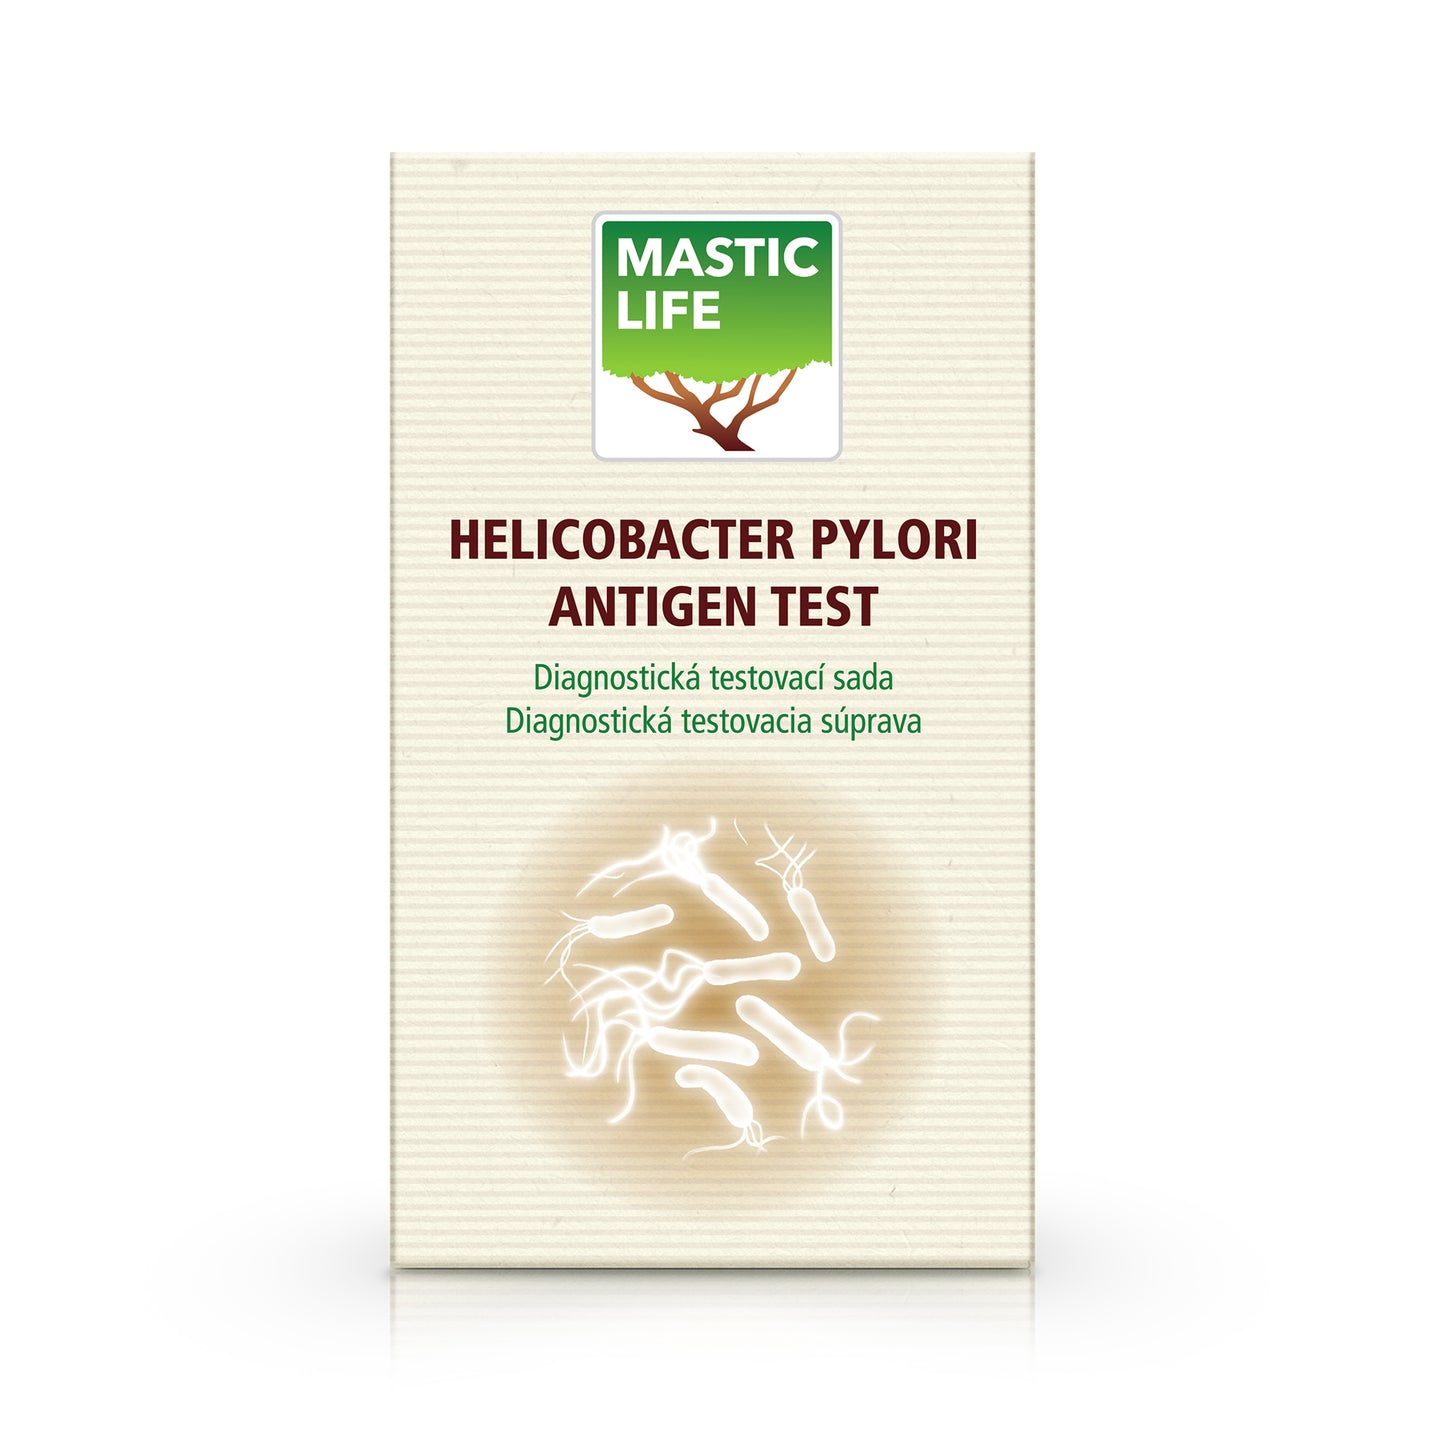 Helicobacter pylori test - Masticha Masticlife (sk)